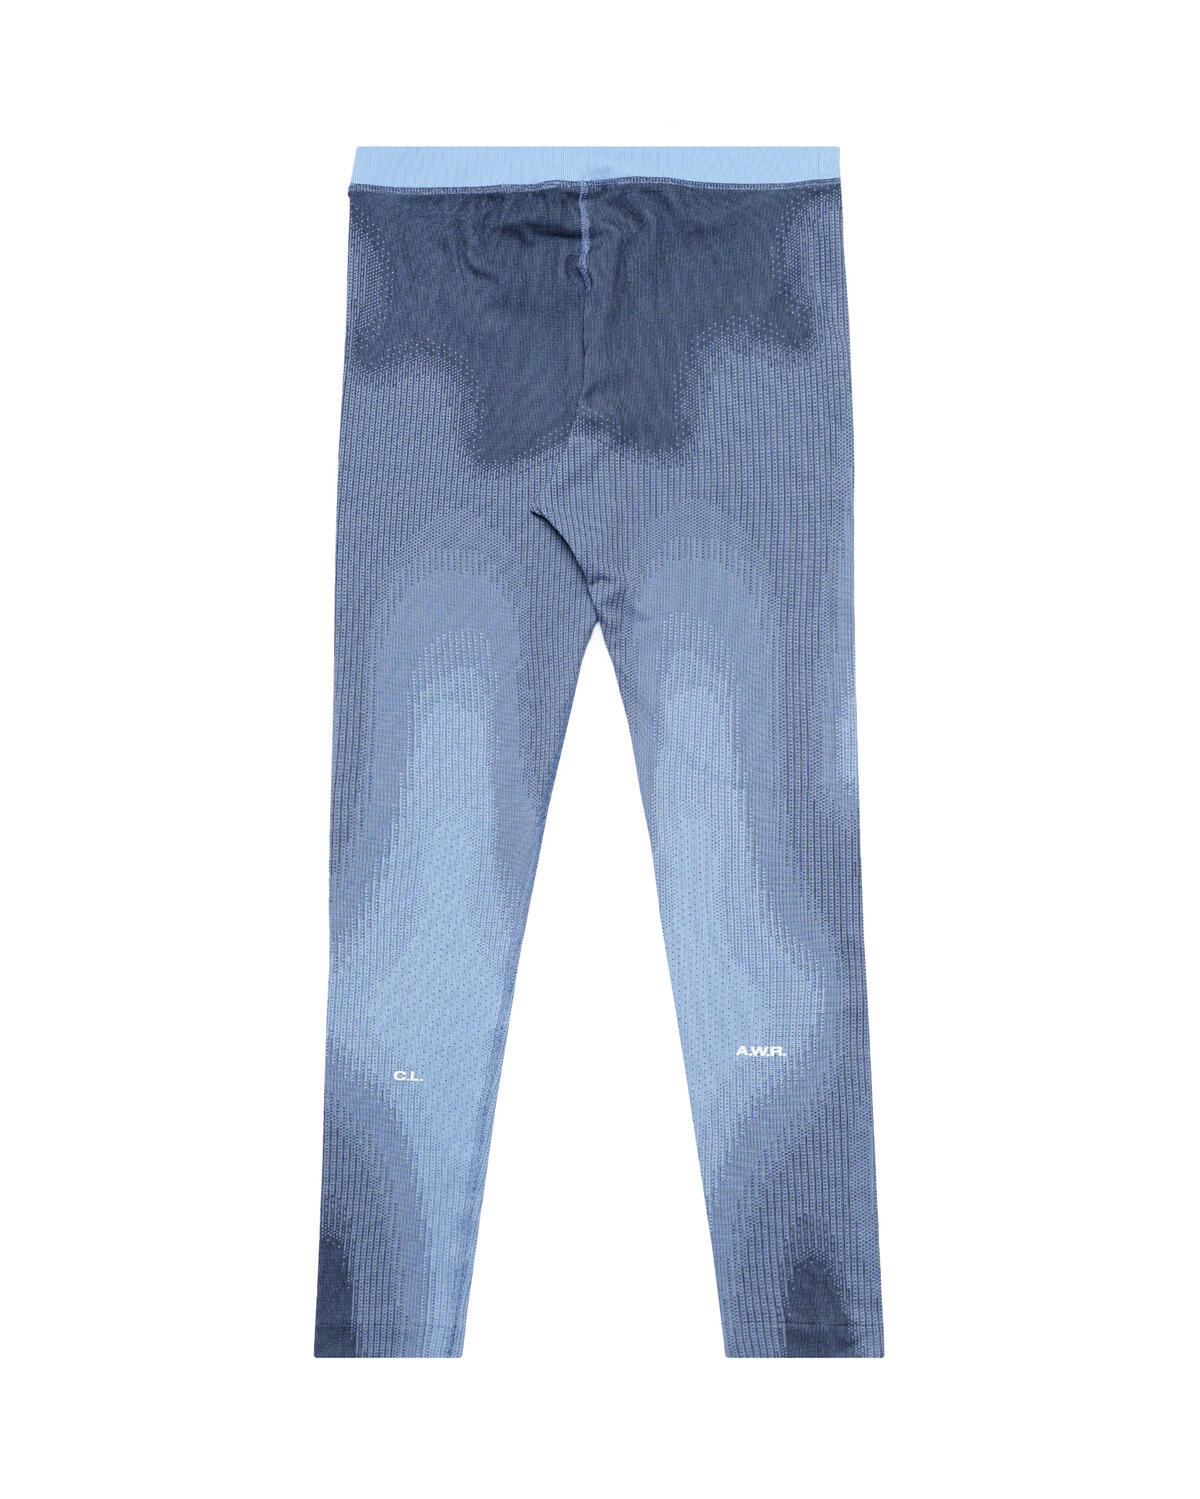 Leggings Nike x Nocta M NRG Tights Dri-FIT Eng Knit Tight Cobalt